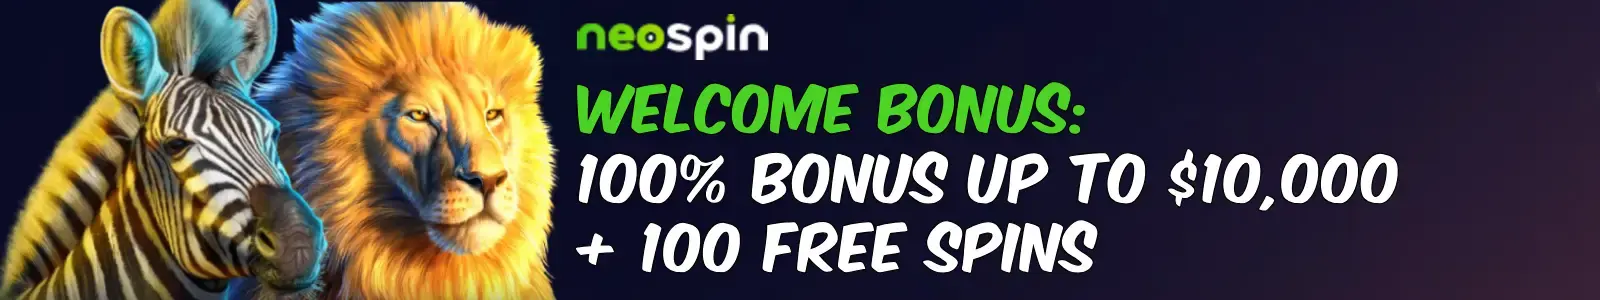 Neospin Casino welcome bonus